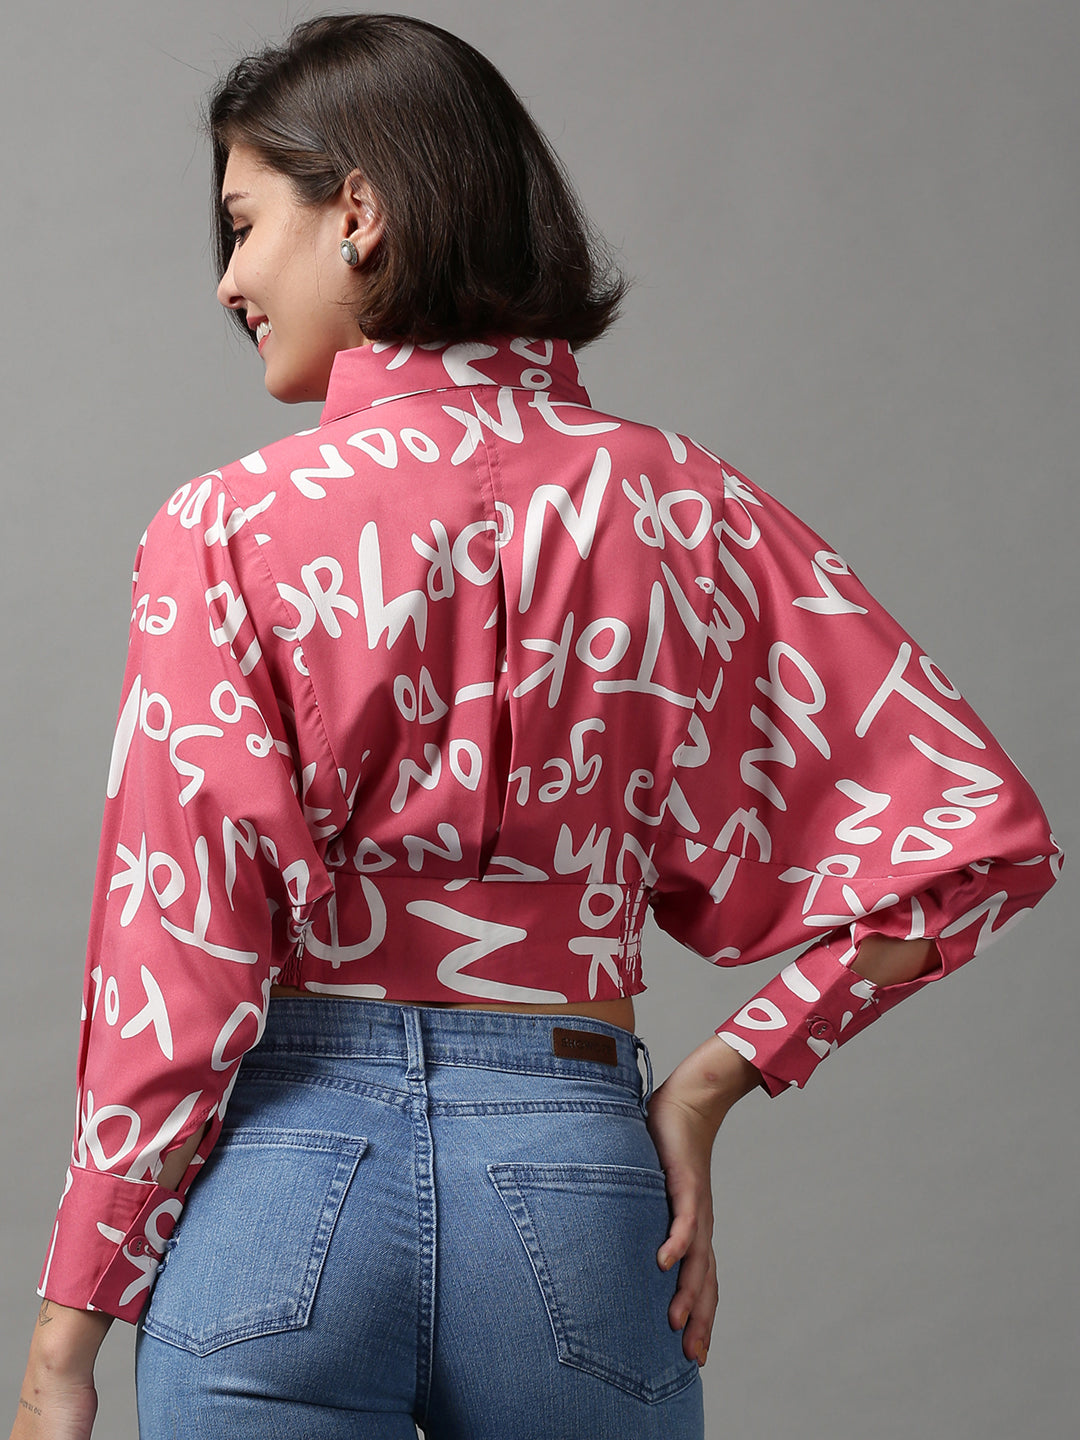 Women's Pink Printed Top